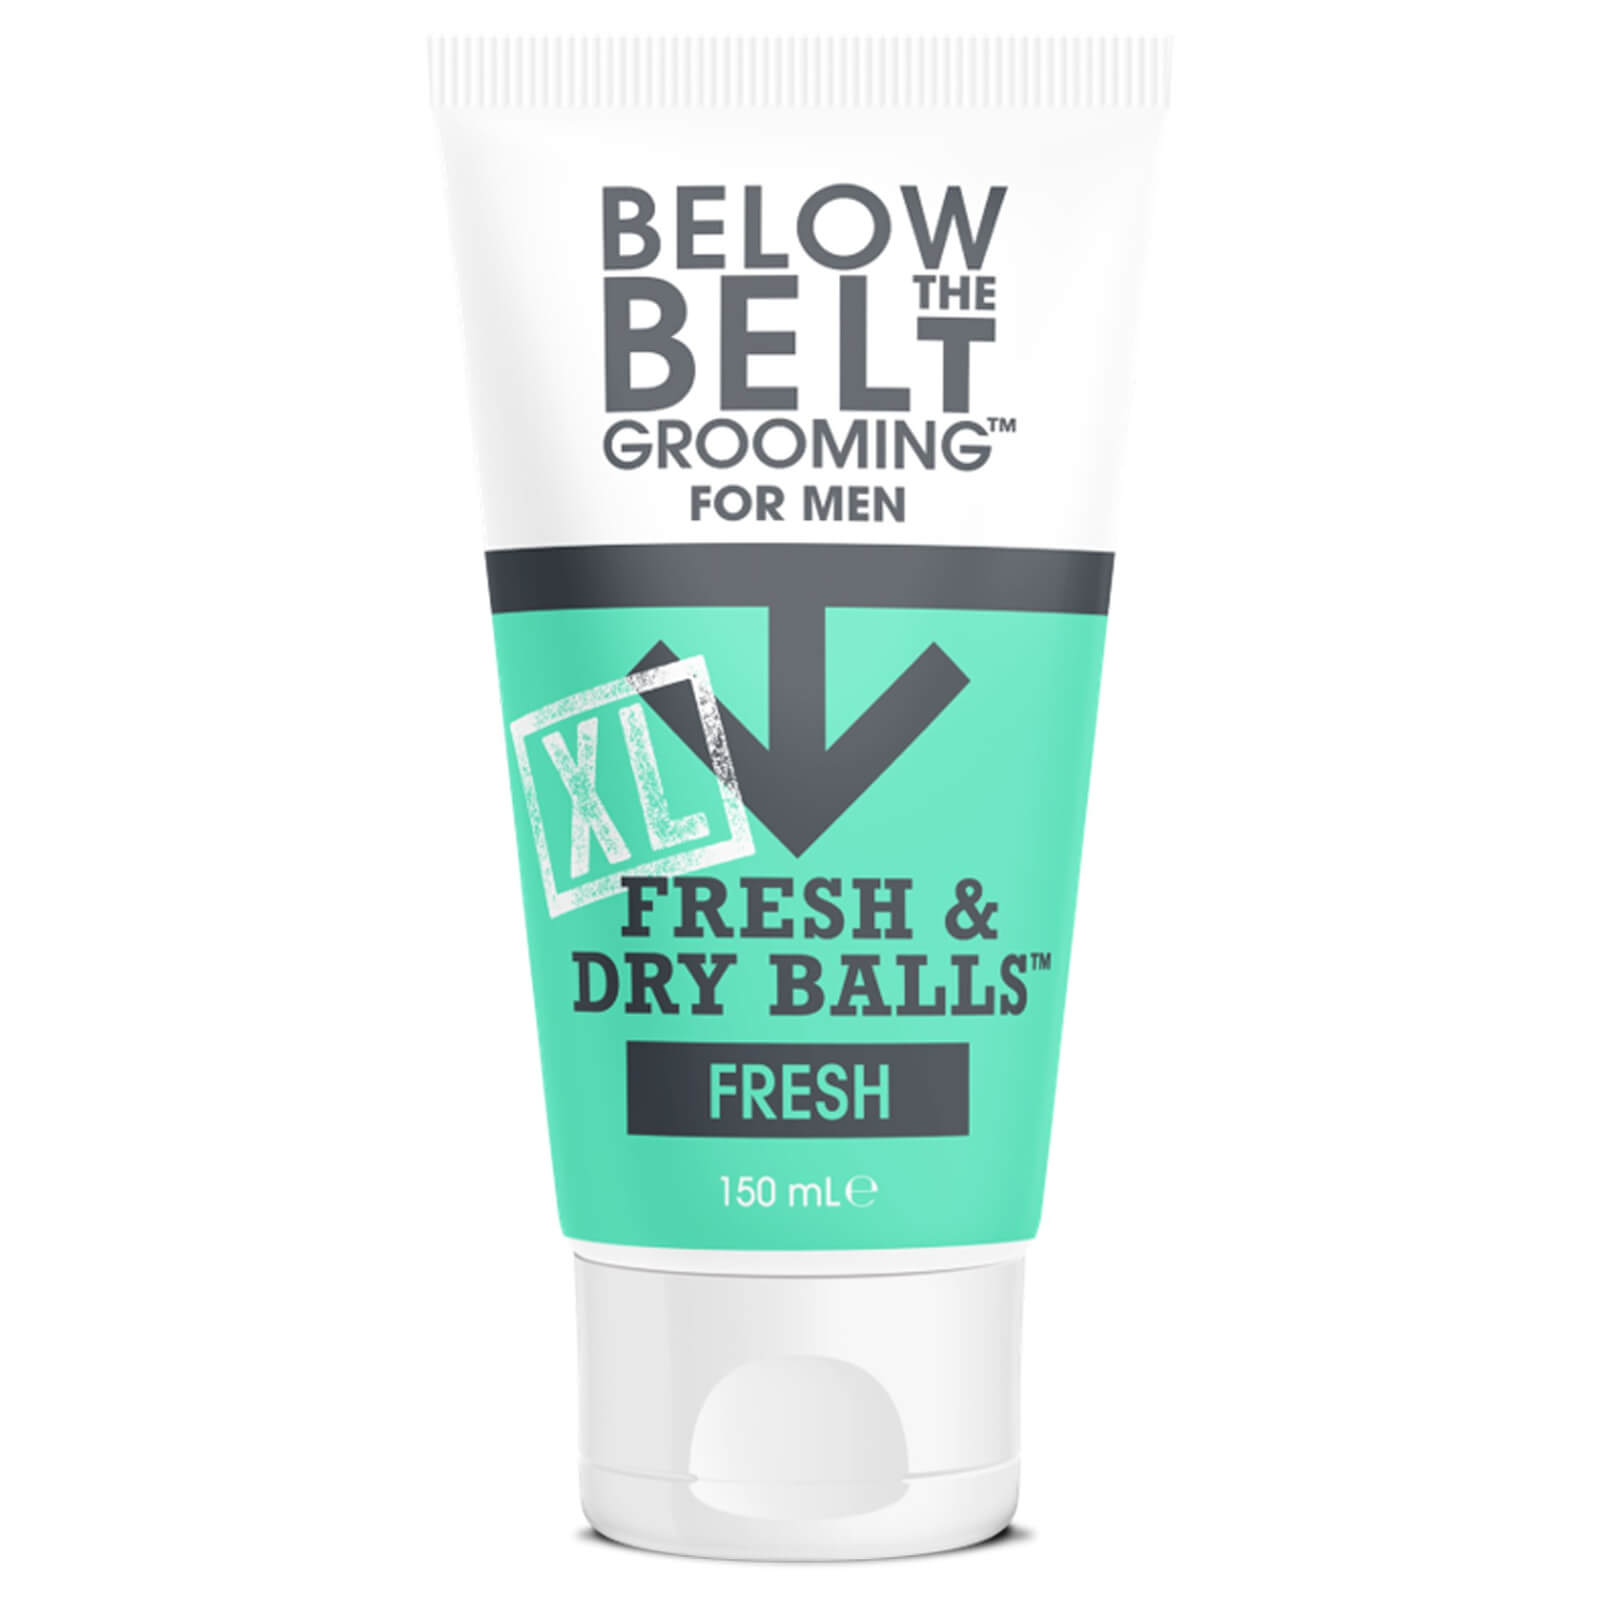 Below the Belt Grooming Fresh and Dry Balls - Fresh XL 150ml